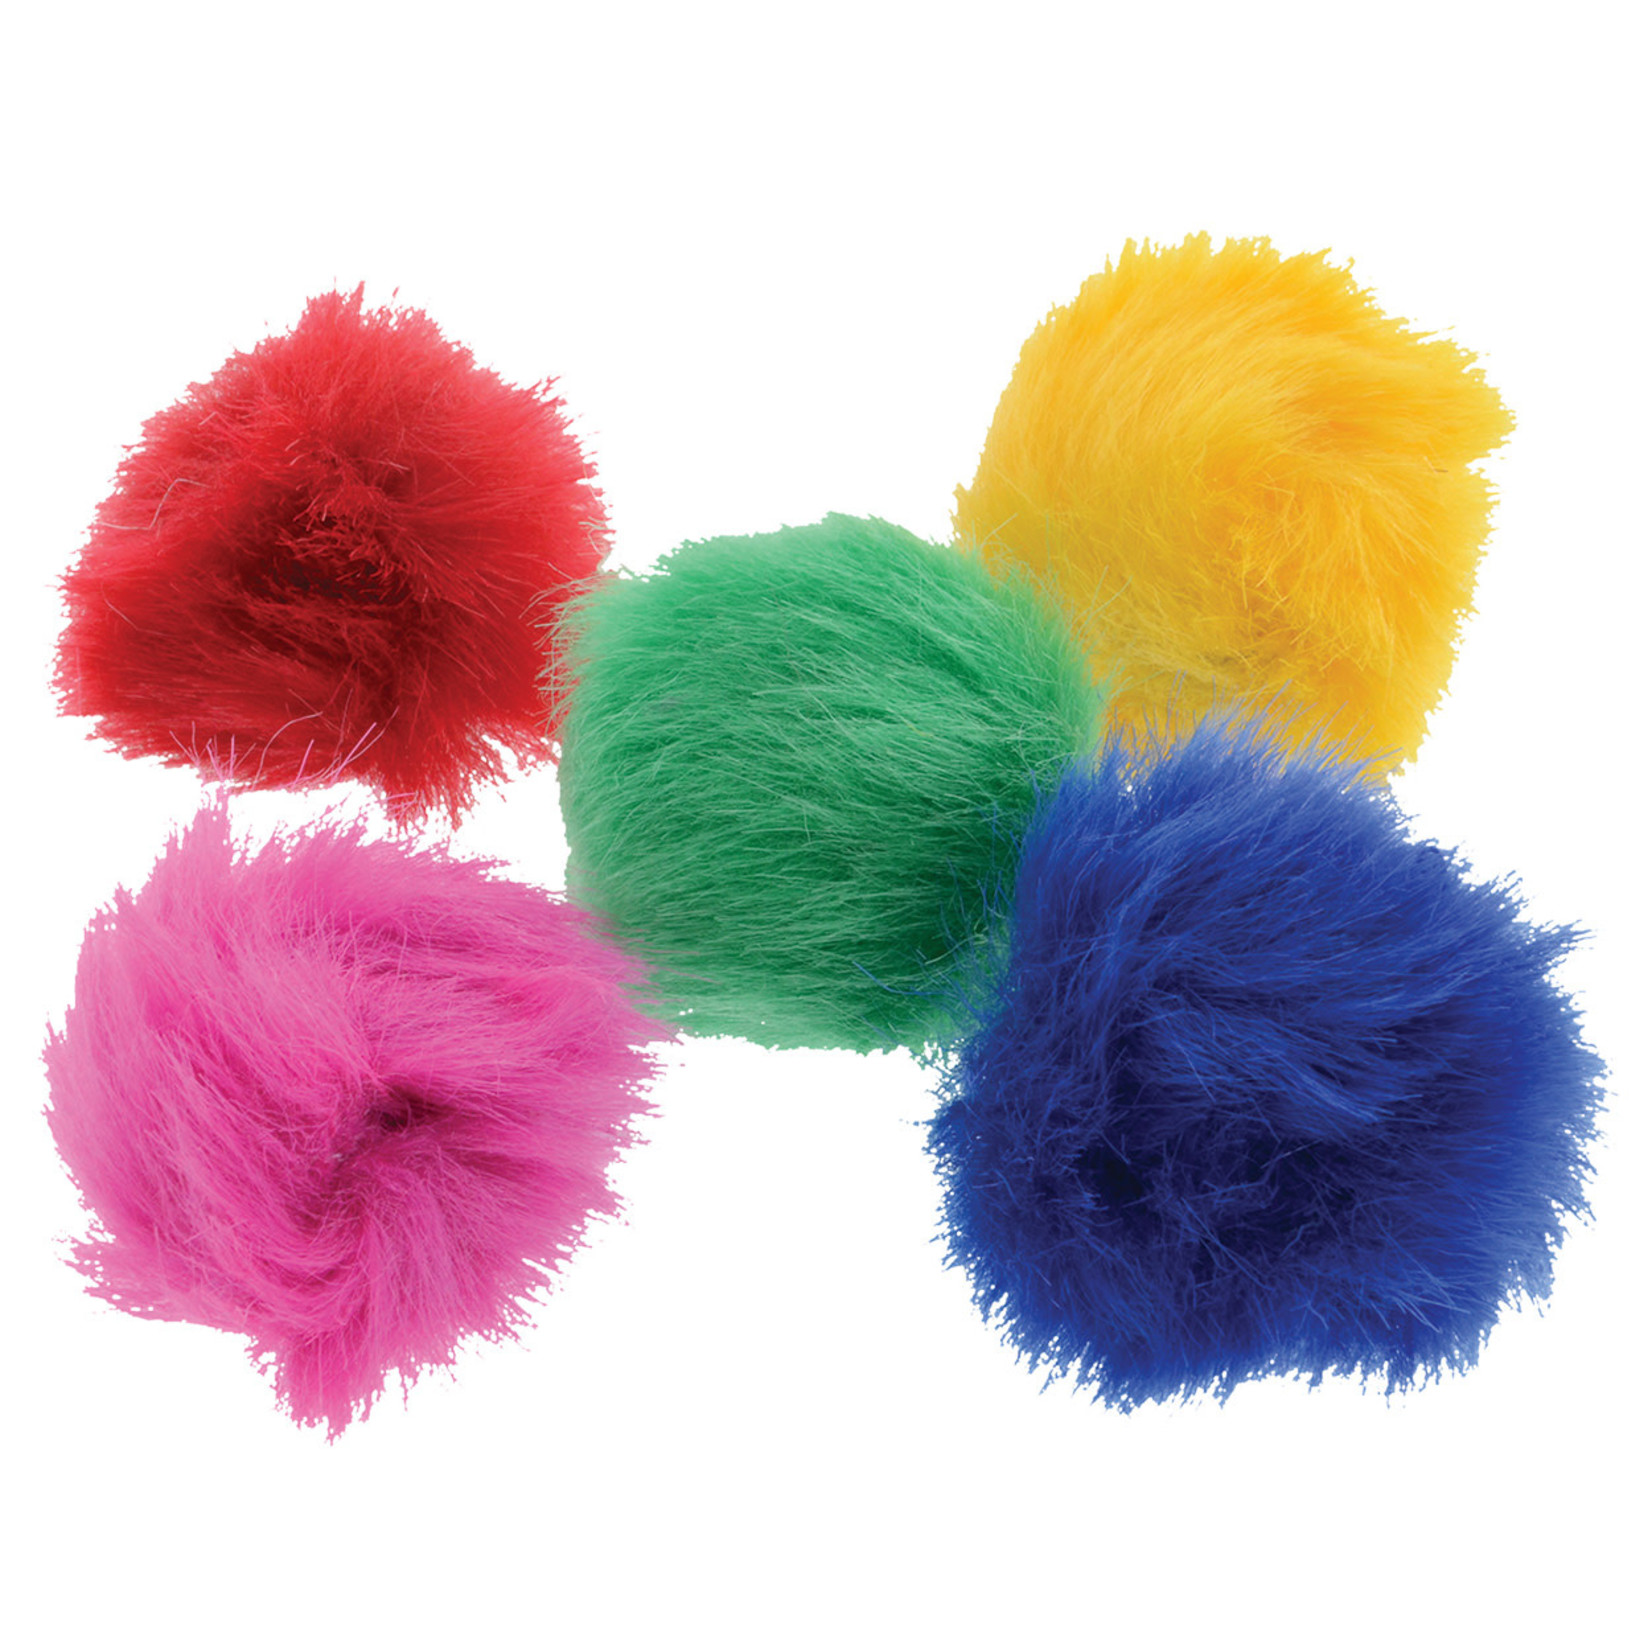 PENN PLAX Penn Plax Fuzzy Ball  - Assorted Colors - 2"